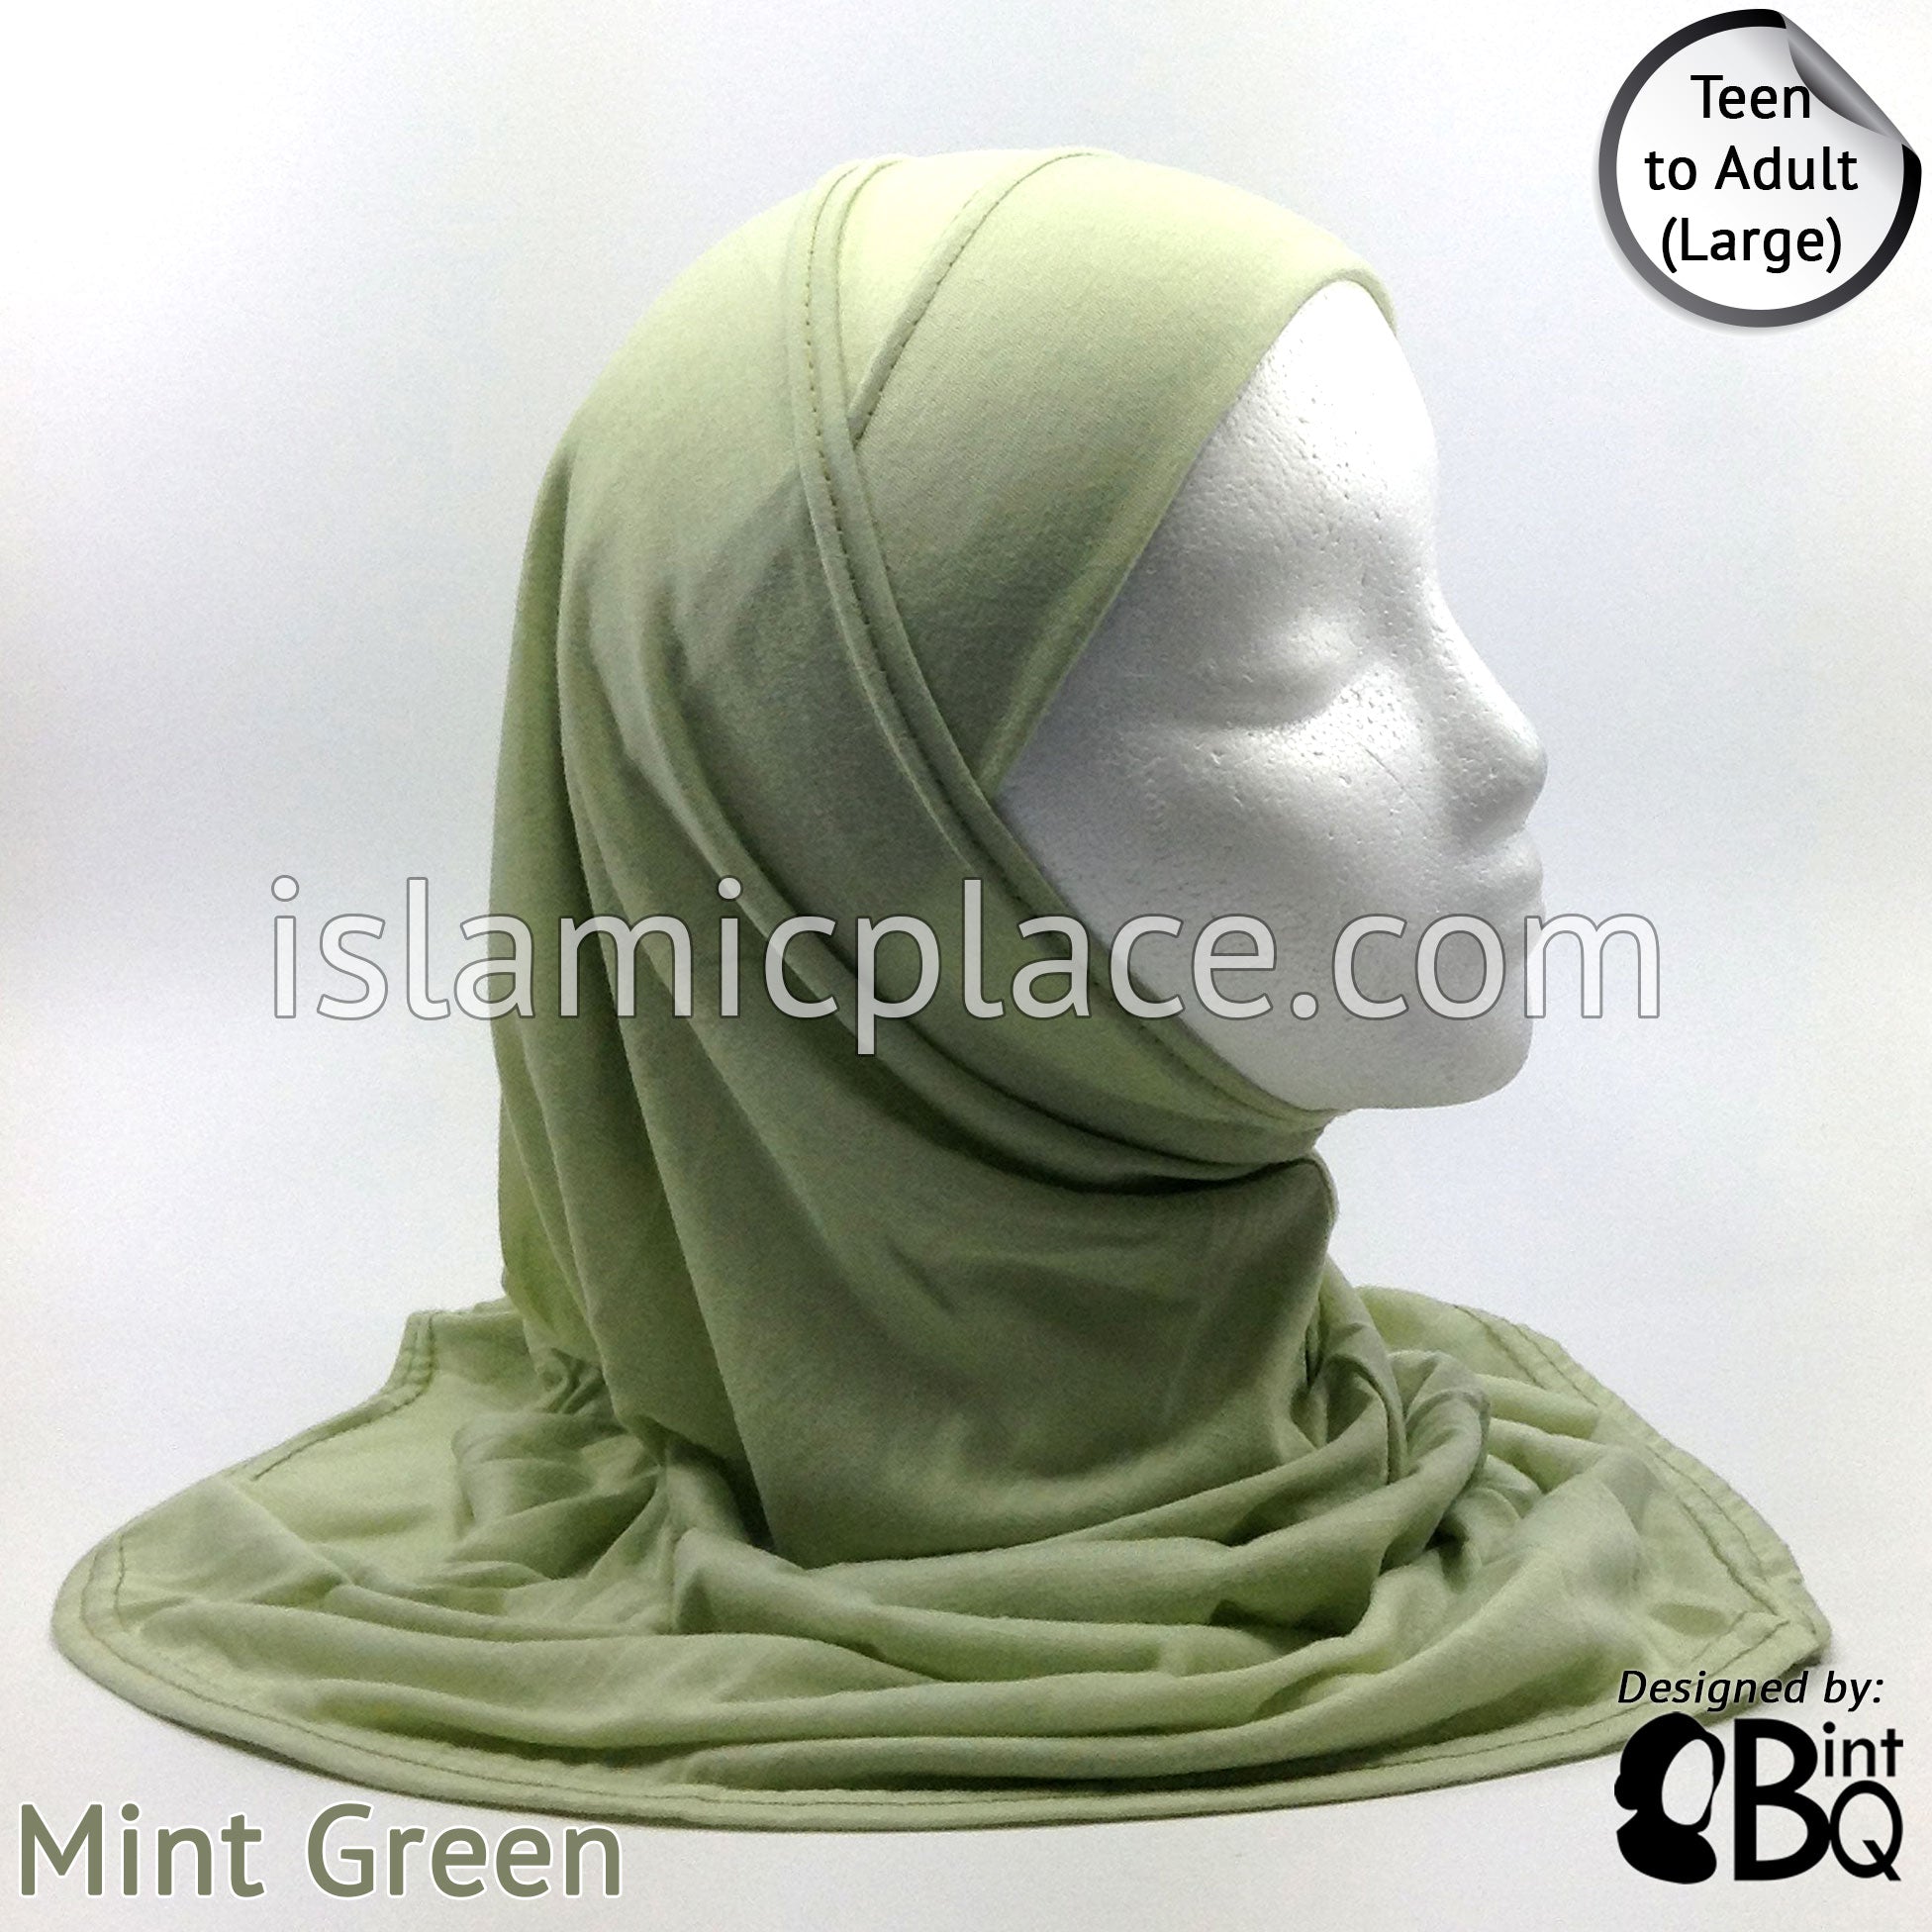 Mint Green - Plain Teen to Adult (Large) Hijab Al-Amira (2-piece style)